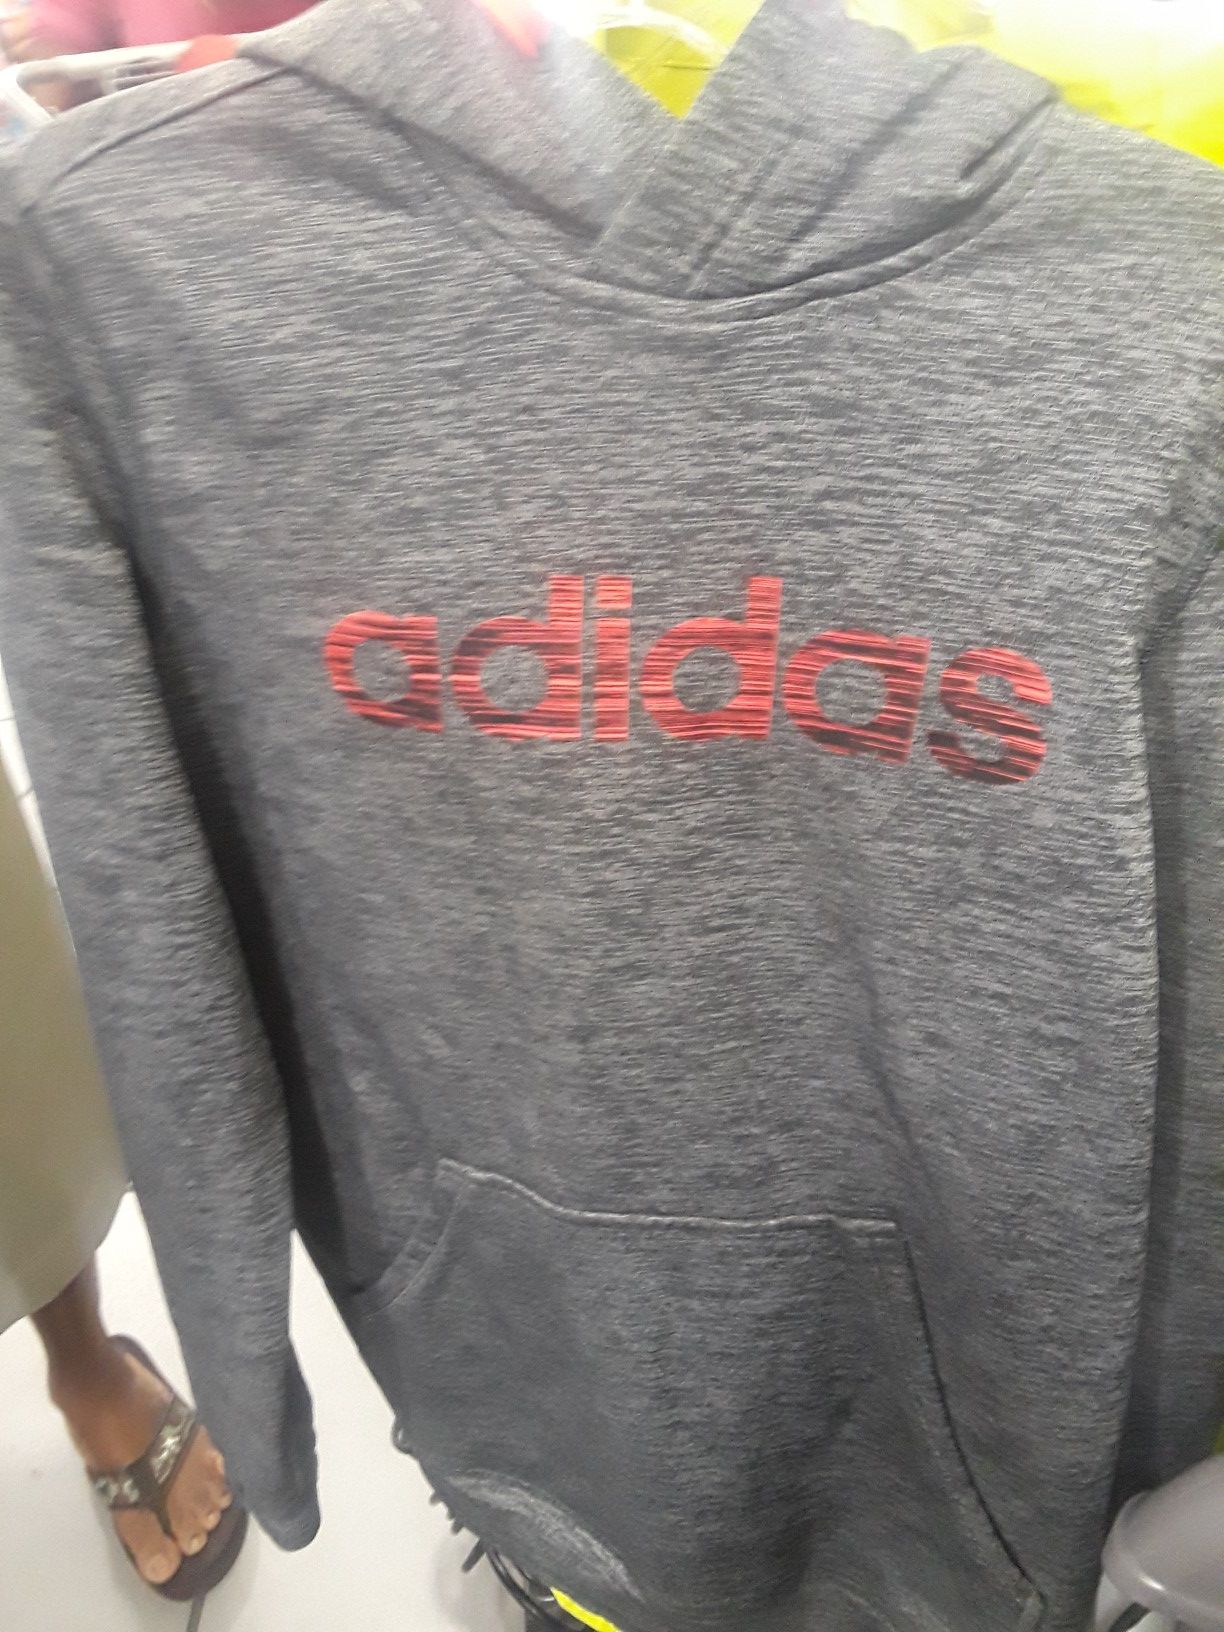 Adidas sweater $30.00